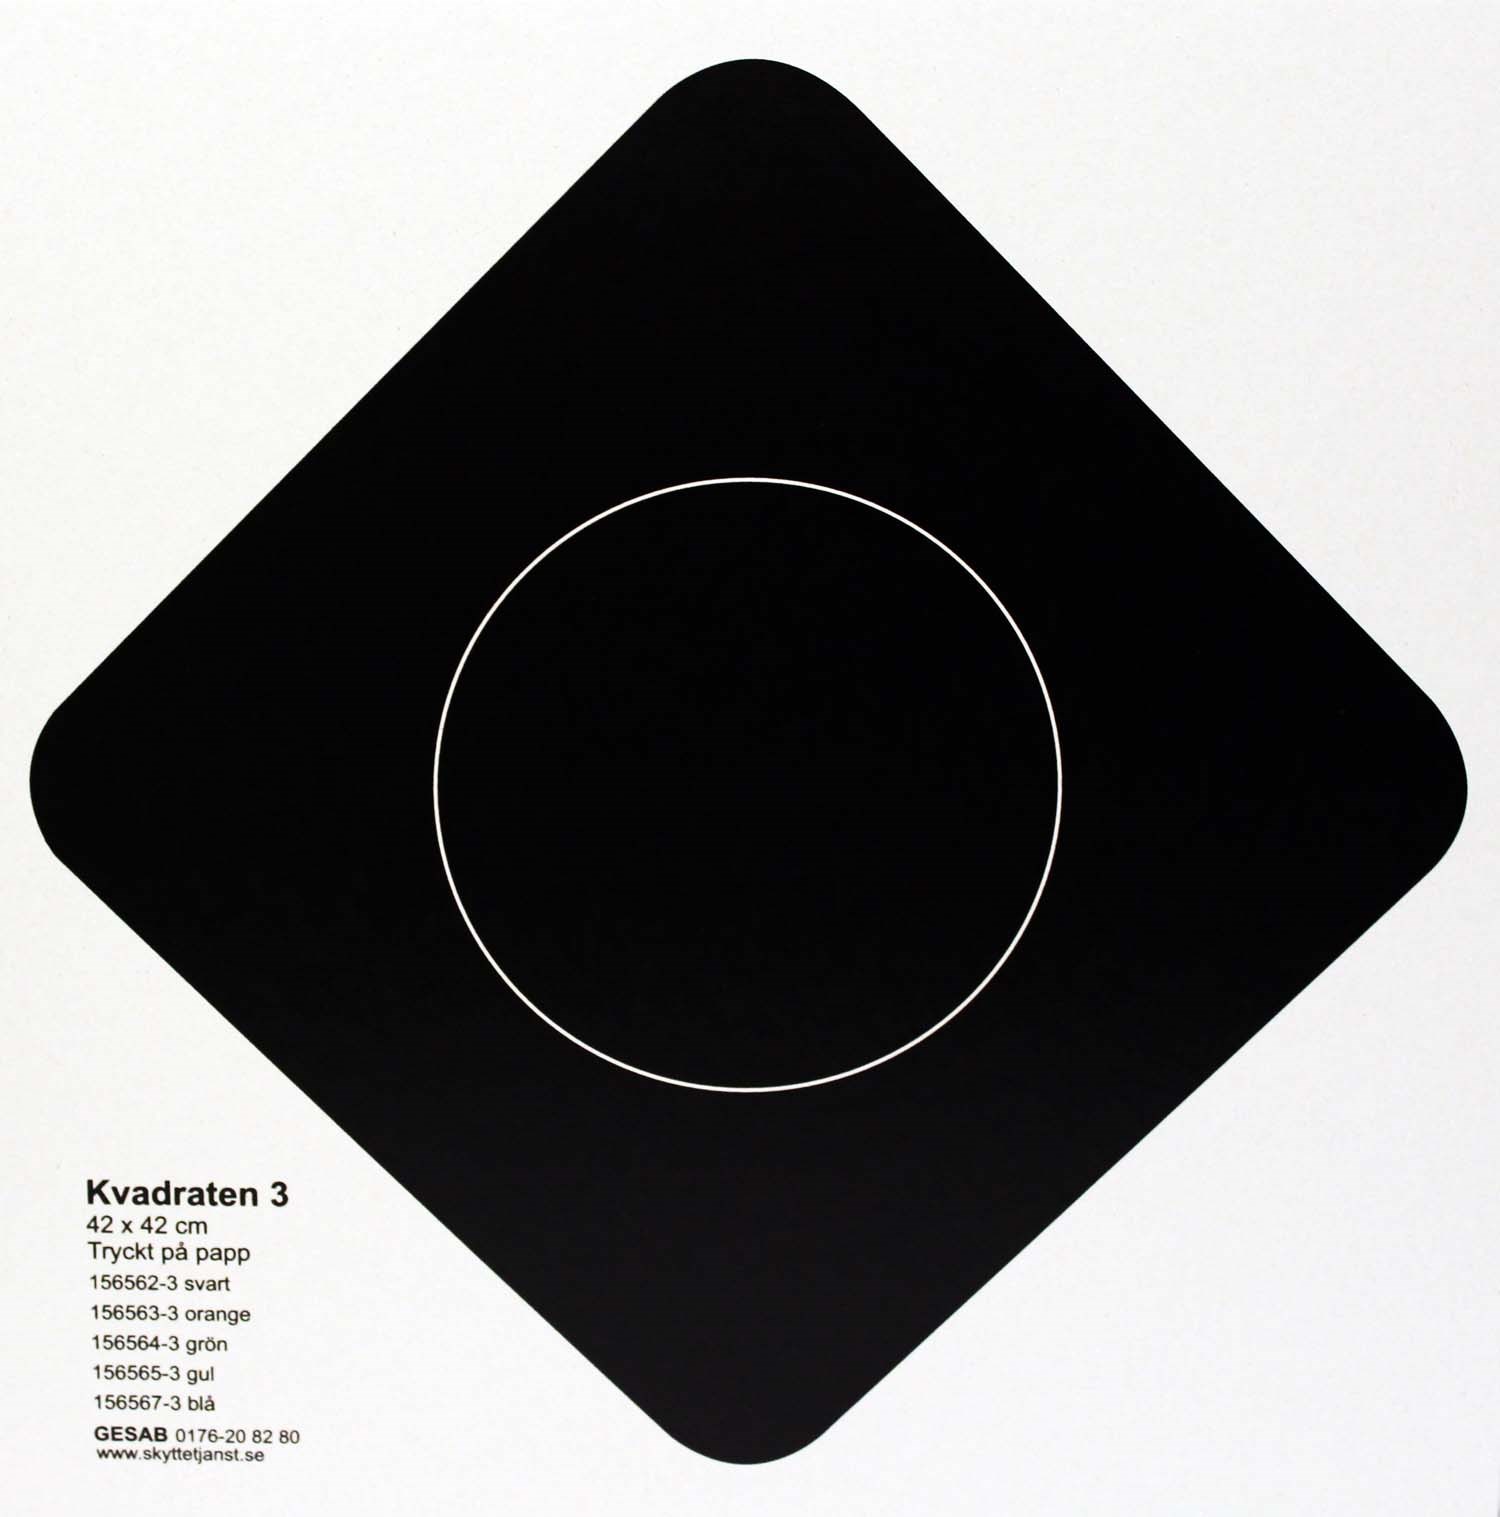 Kvadraten nr 3 svart, 42 x 42 cm